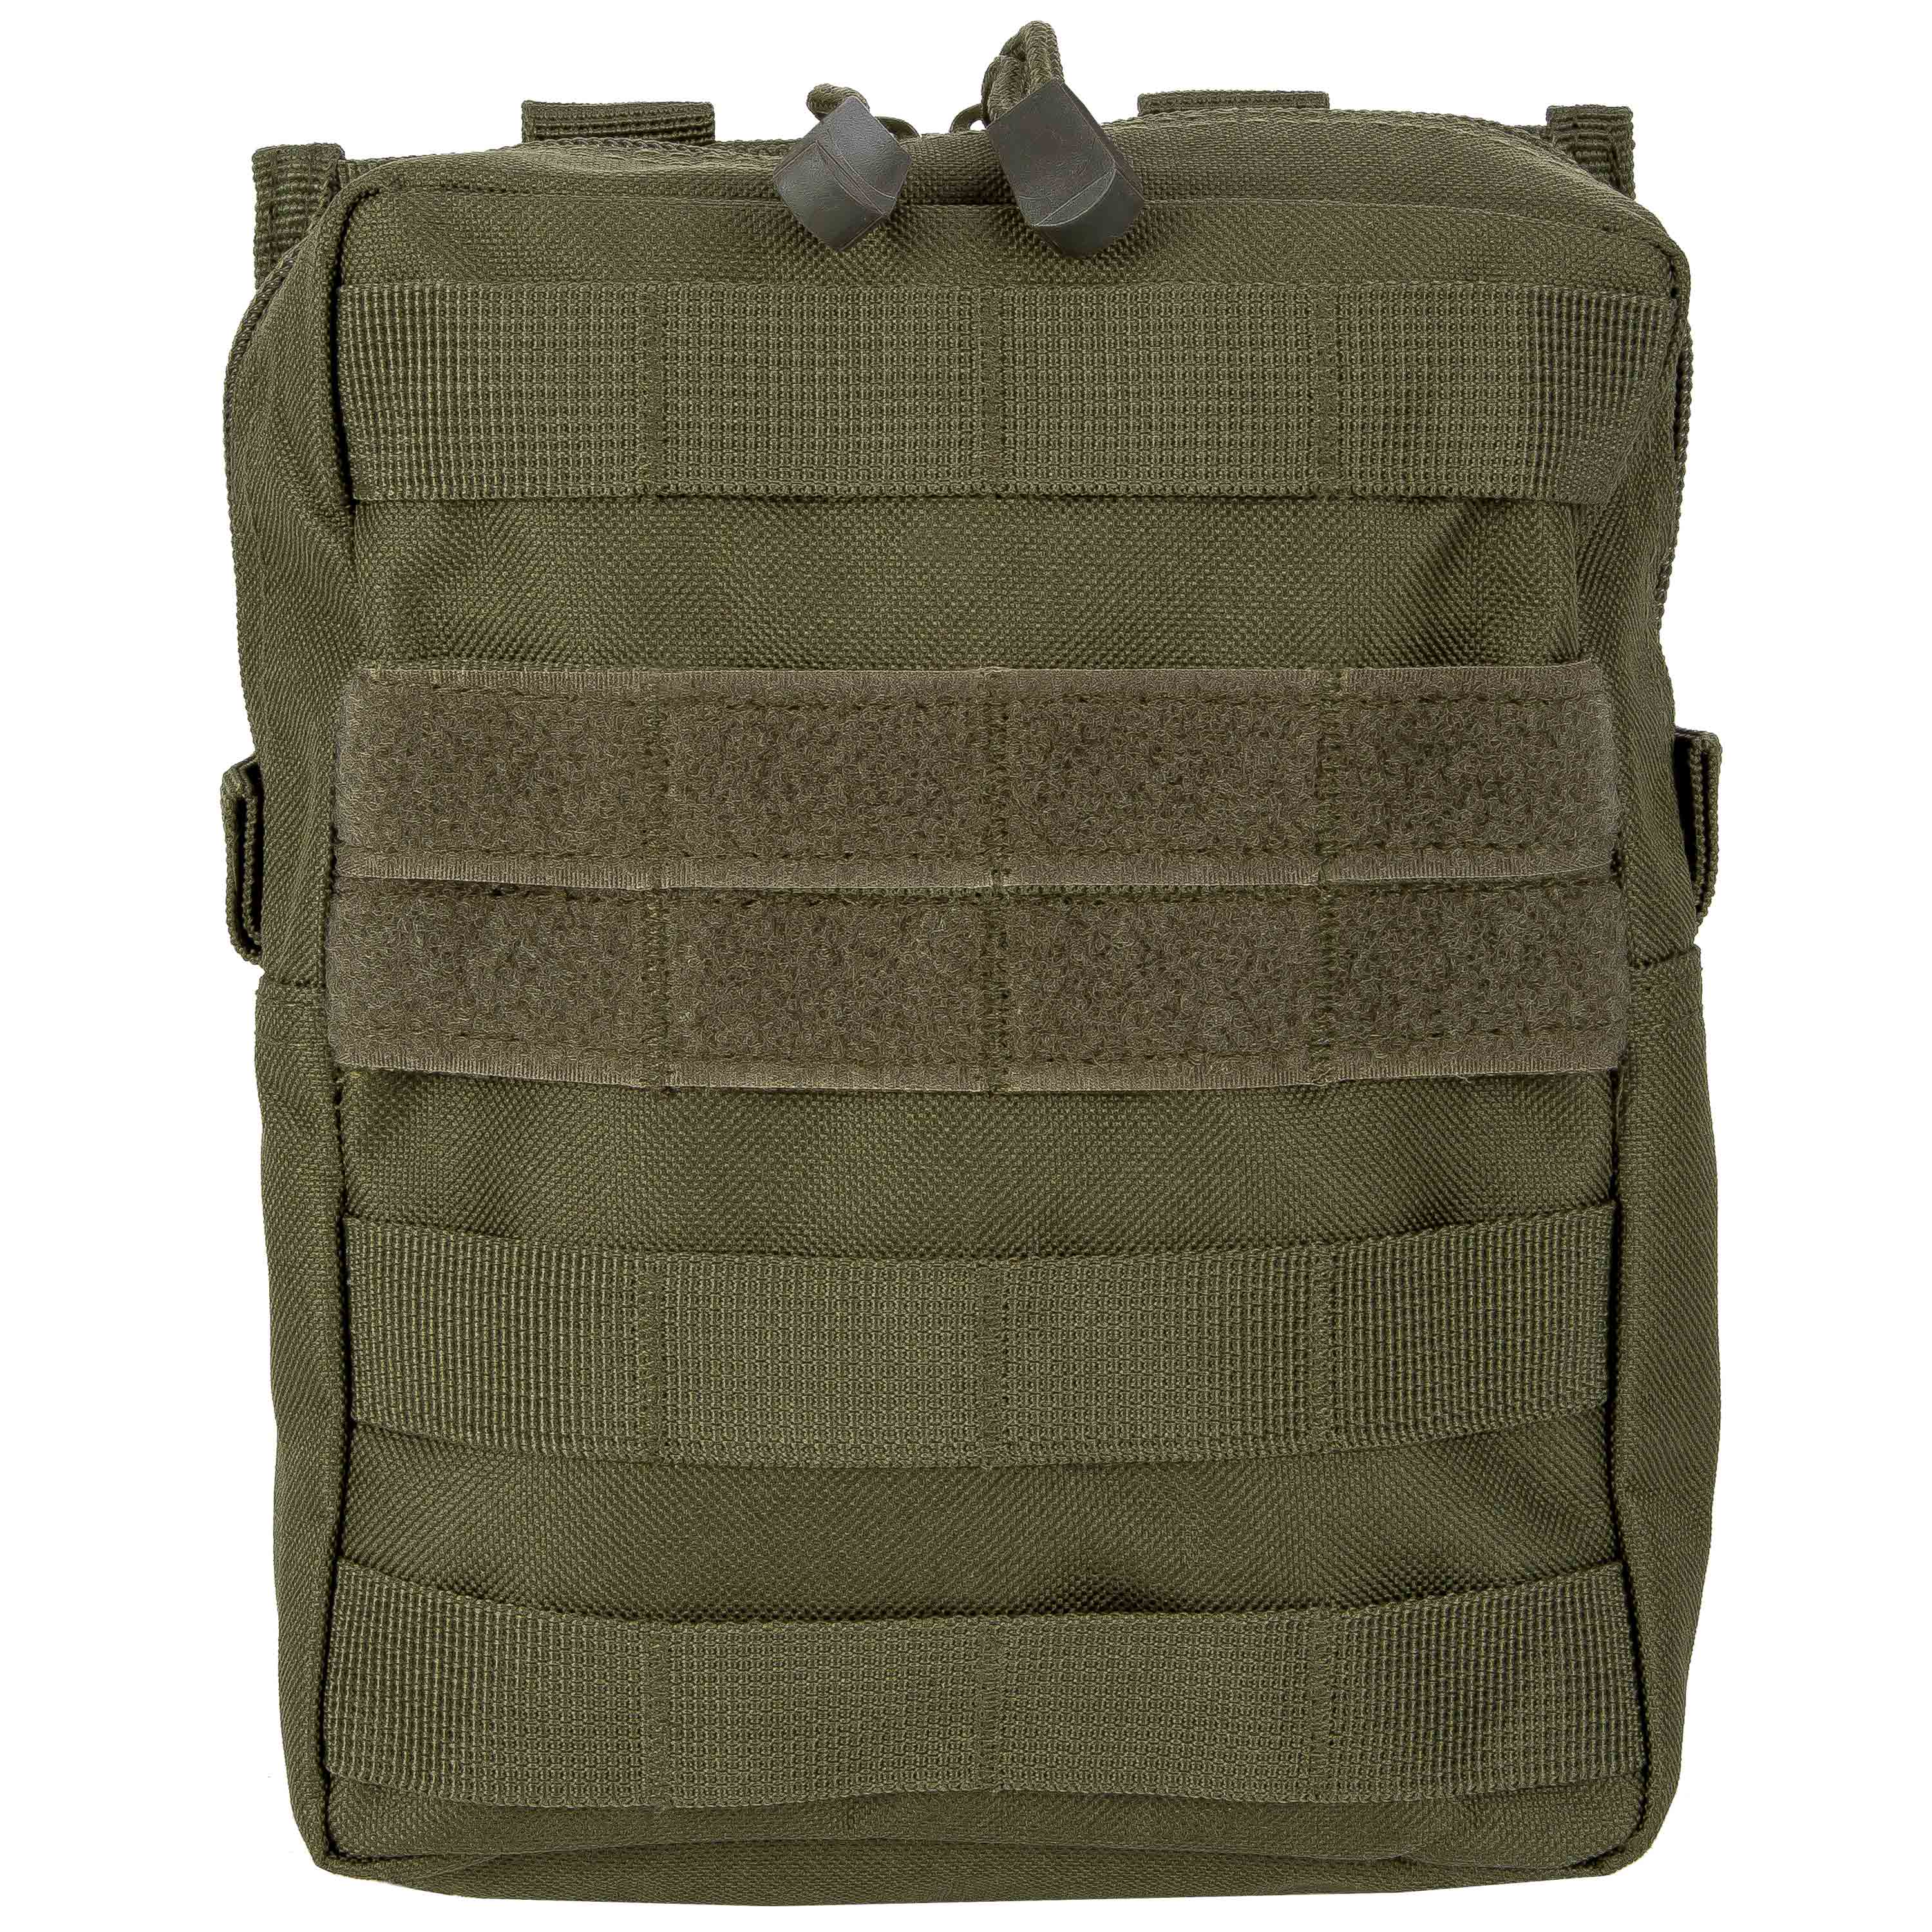 Brandit Molle Snake Ammunition Pouch Carrier Bag Six Colours New 